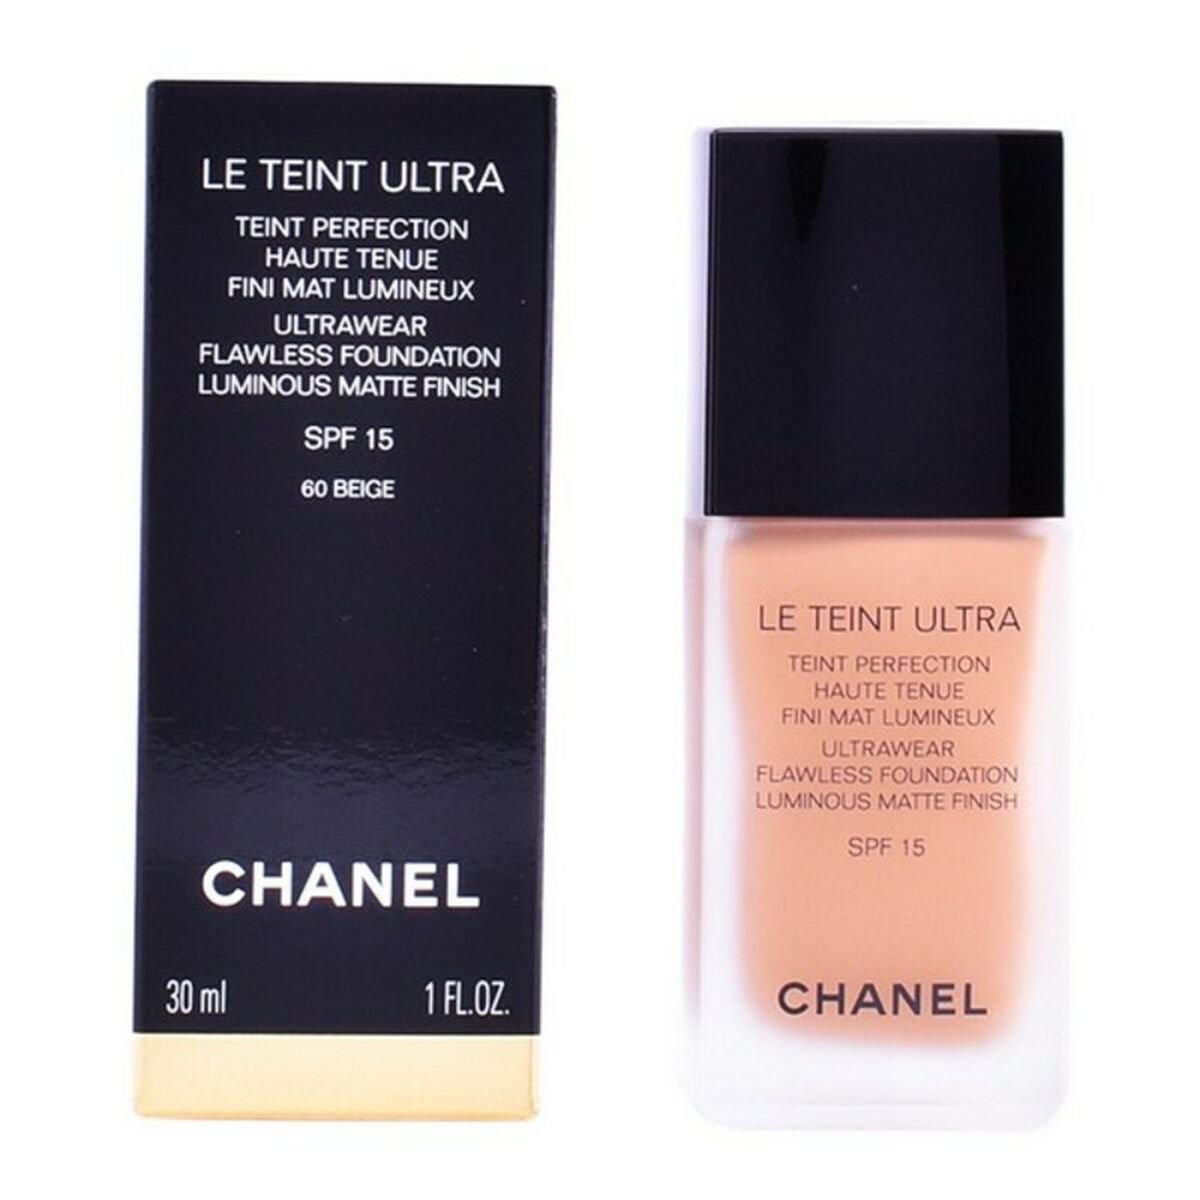 Fluid Foundation Make-up Le Teint Ultra Chanel - JOSEPH BEAUTY